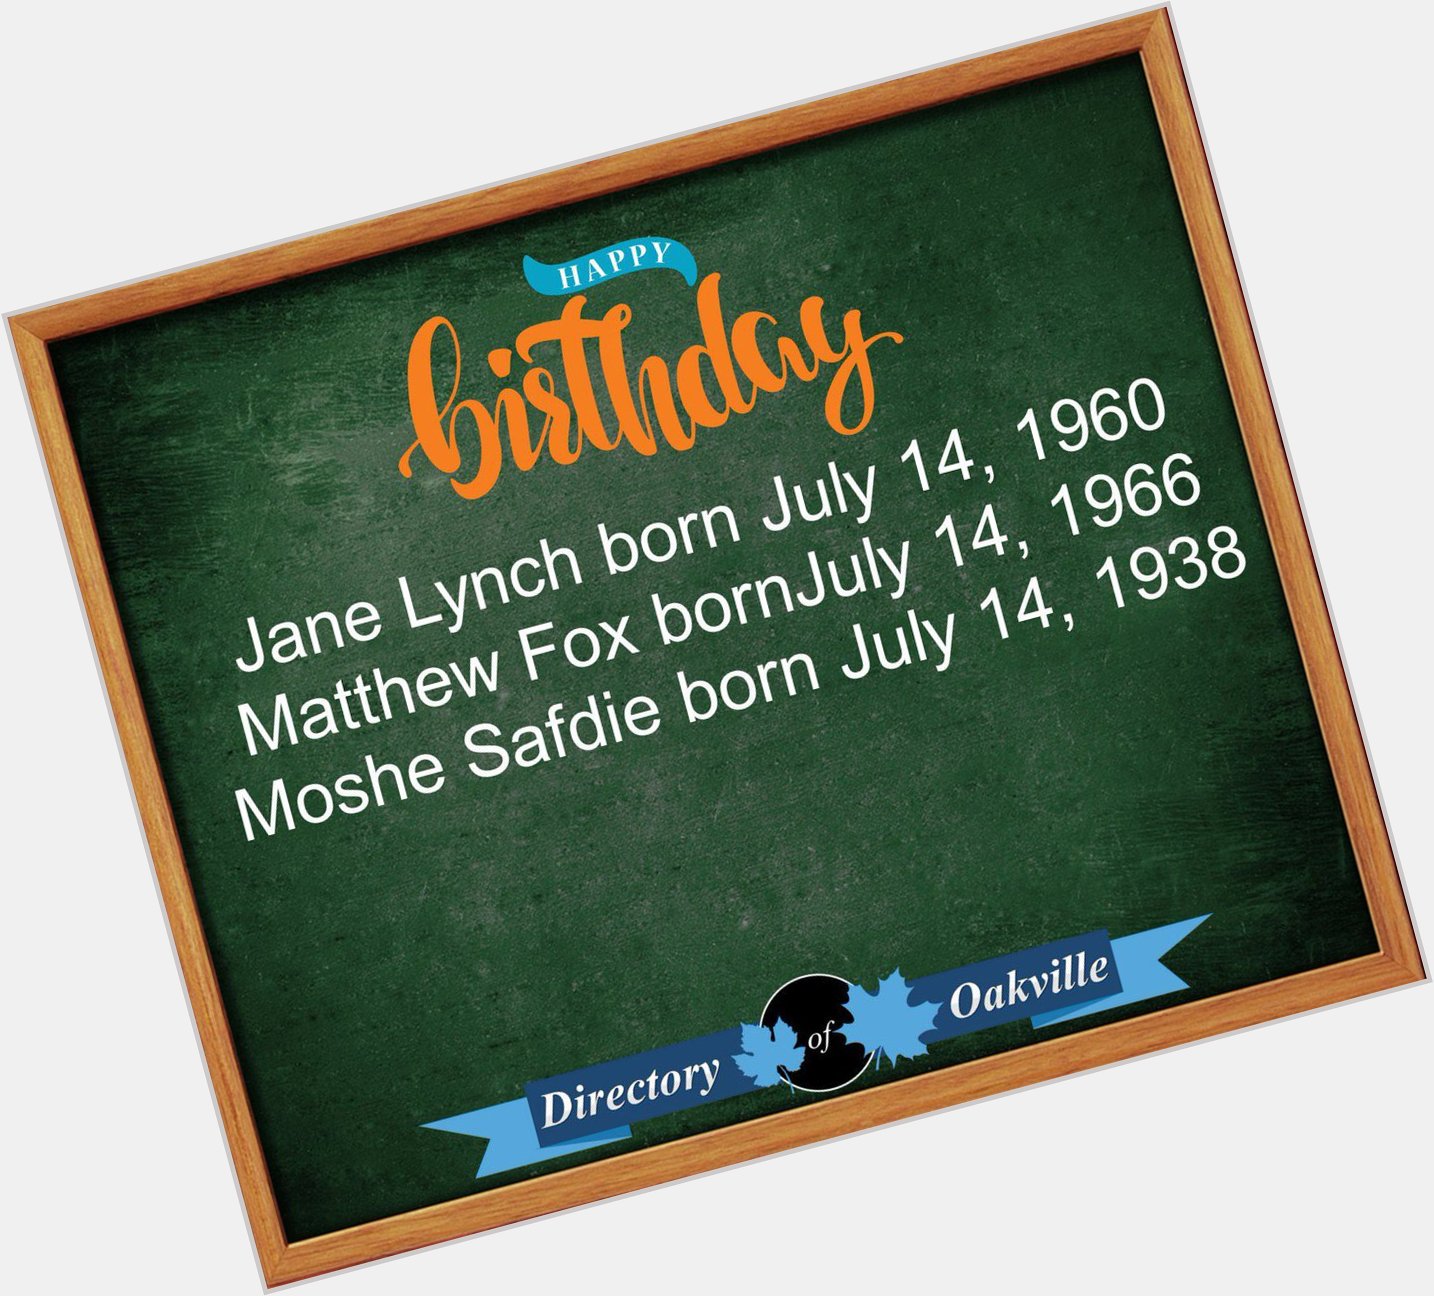 Happy Birthday!
Jane Lynch born July 14, 1960
Matthew Fox bornJuly 14, 1966
Moshe Safdie born July 14, 1938 